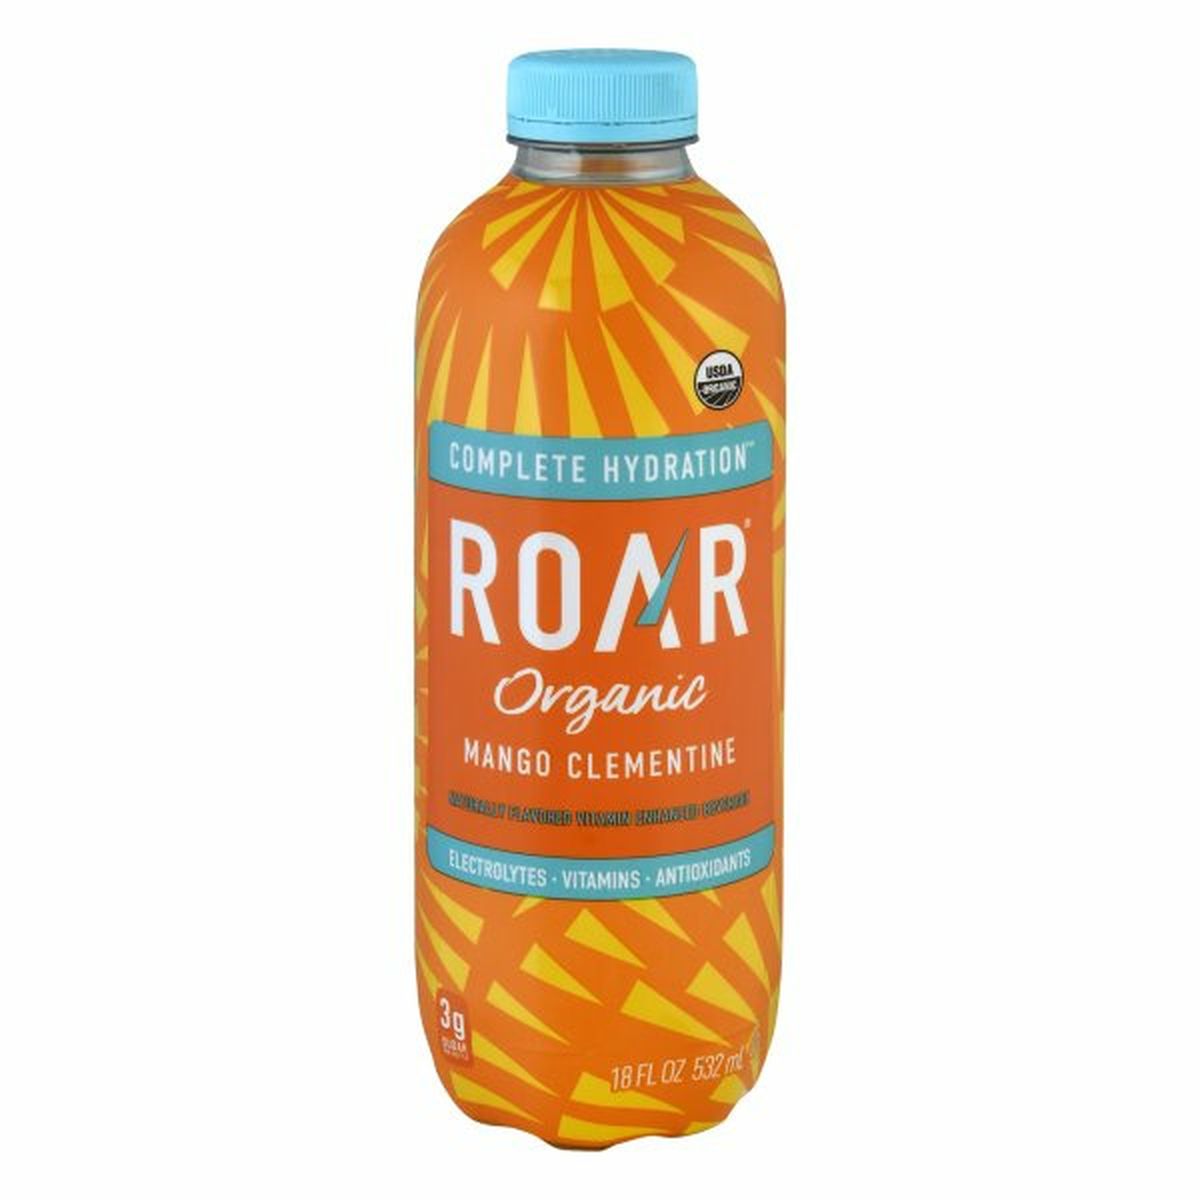 Calories in Roar Complete Hydration Vitamin Enhanced Beverage, Organic, Mango Clementine